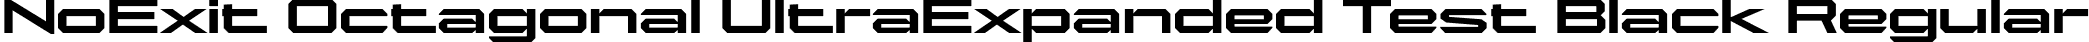 NoExit Octagonal UltraExpanded Test Black Regular font | NoExitOctagonalUltraExpandedTest-Black.otf